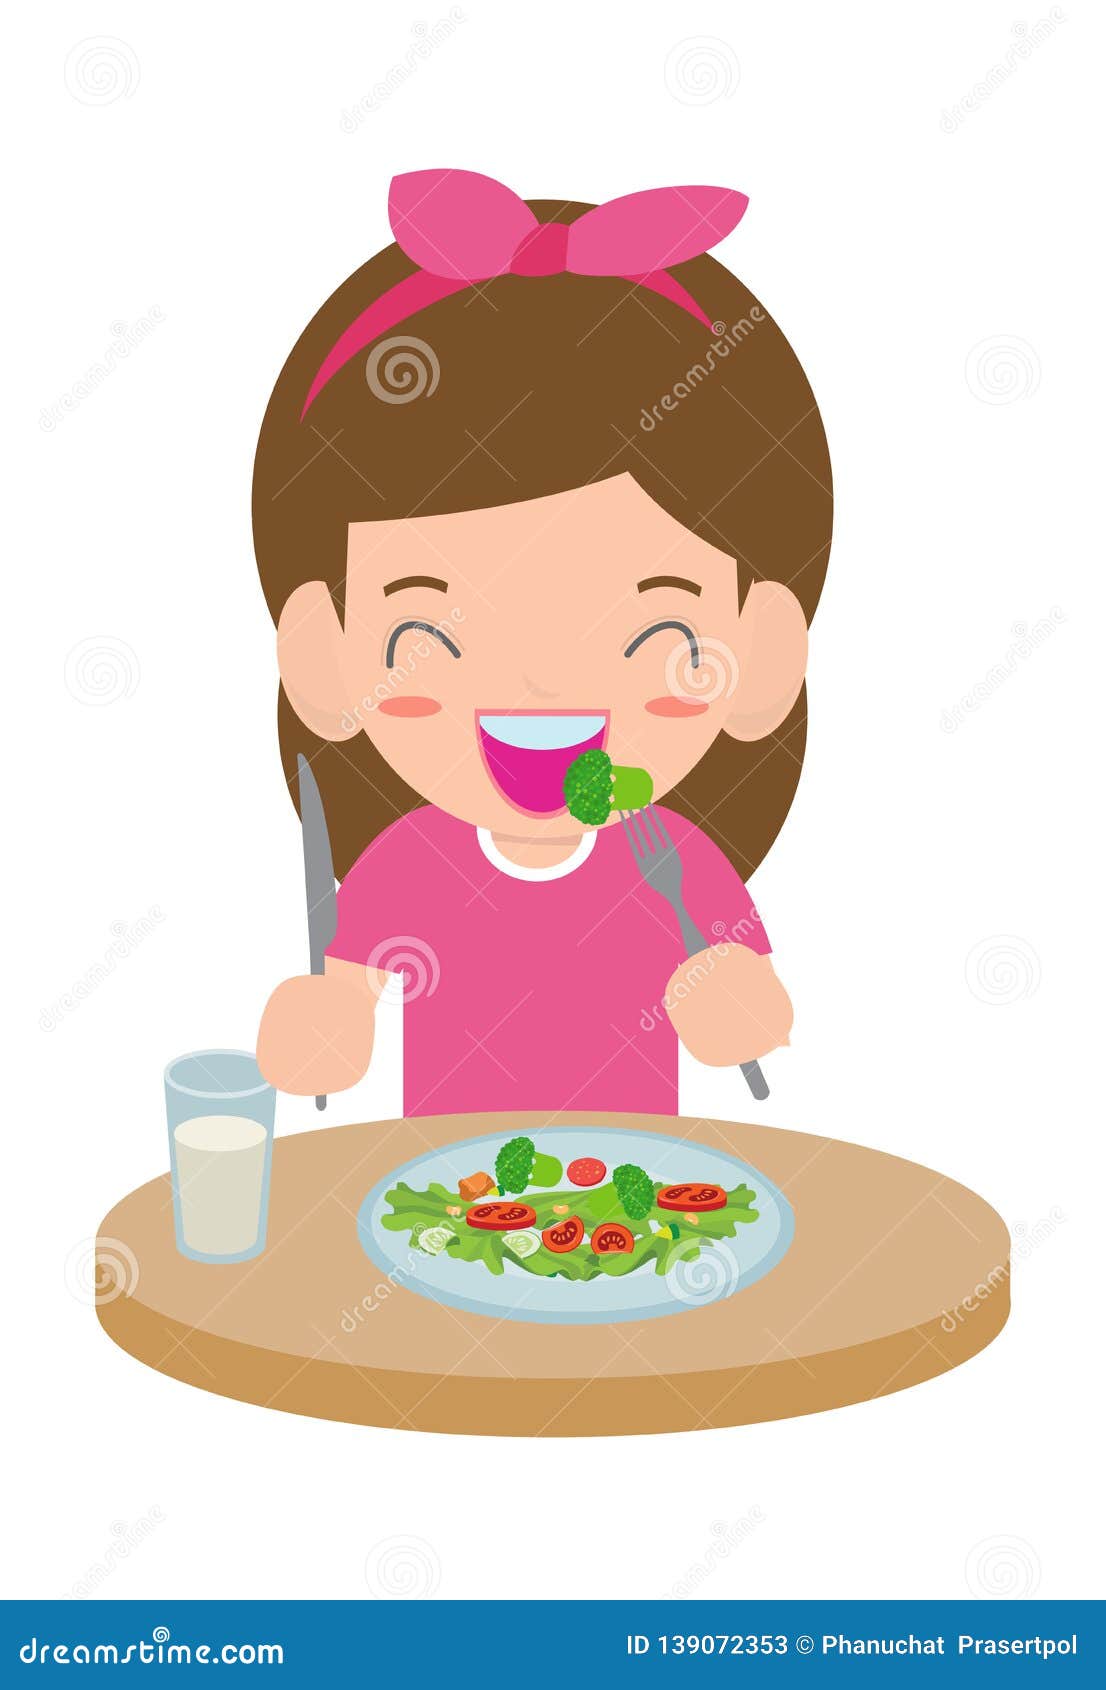 Cute Cartoon Happy Girl Eating Salad. Healthy Vegetable Food and Children  Vector Illustration. Stock Vector - Illustration of dinner, fresh: 139072353